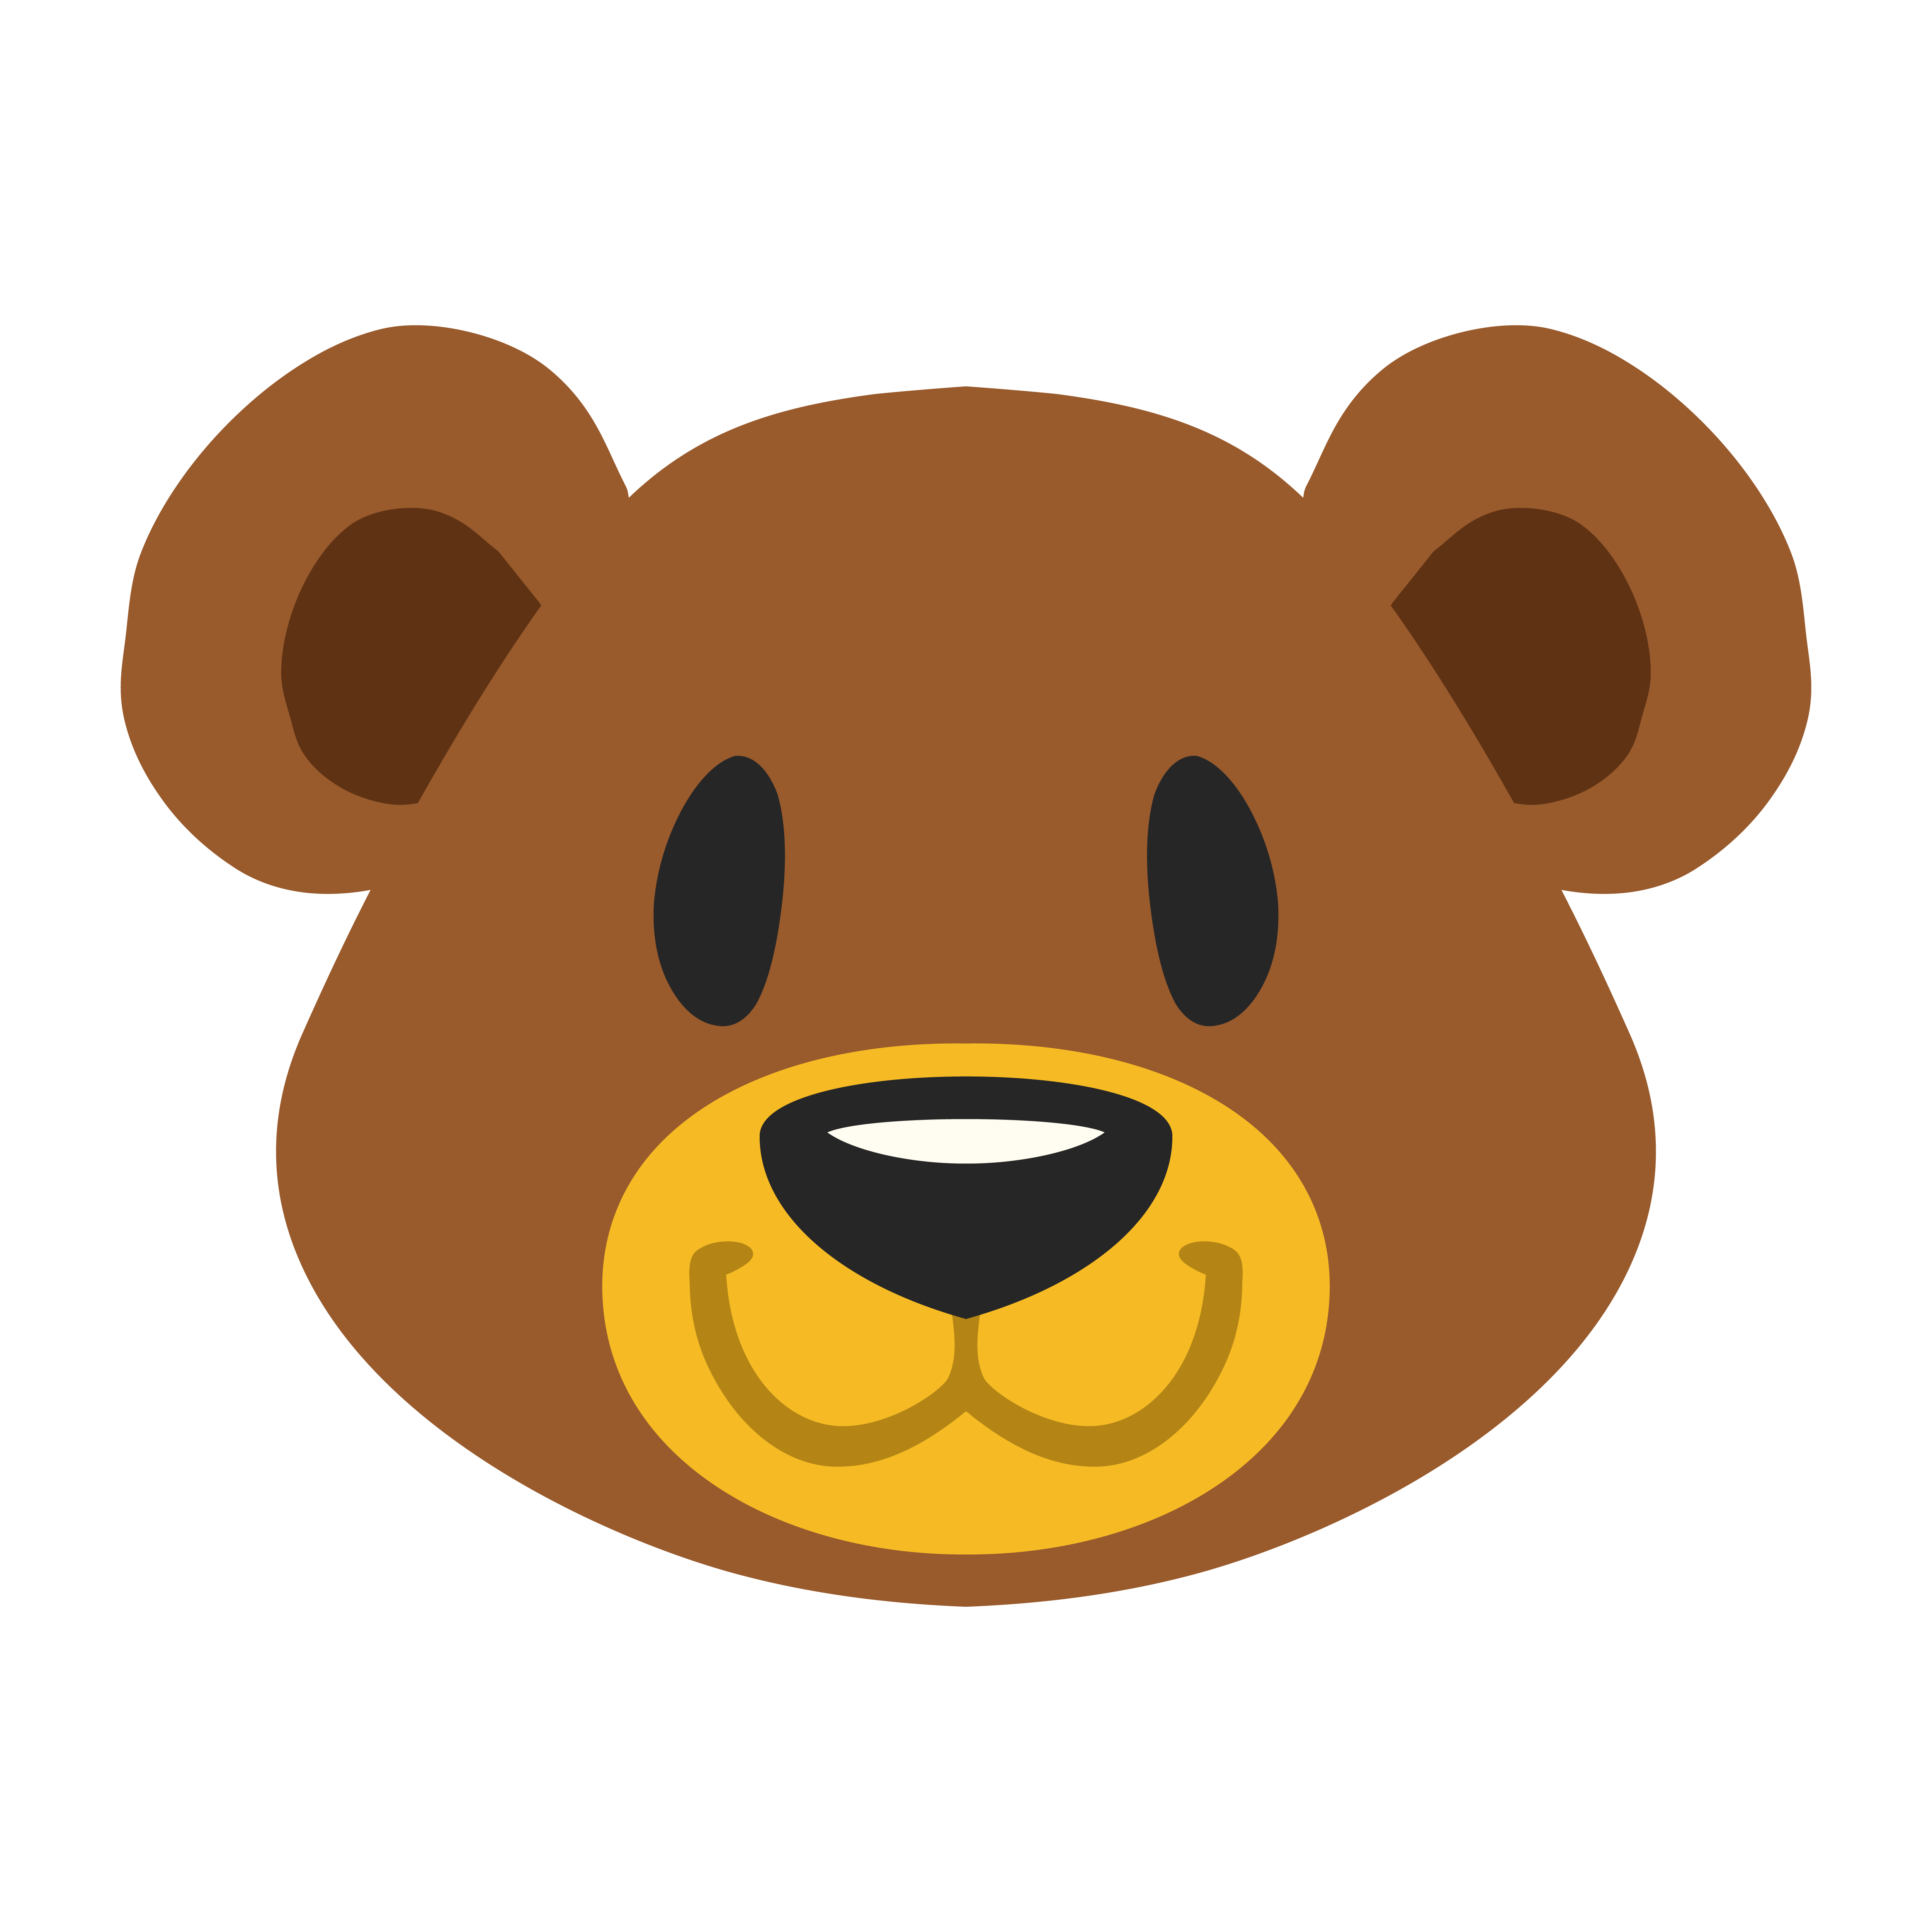 Download Cute Teddy Bear - Download Free Vectors, Clipart Graphics ...